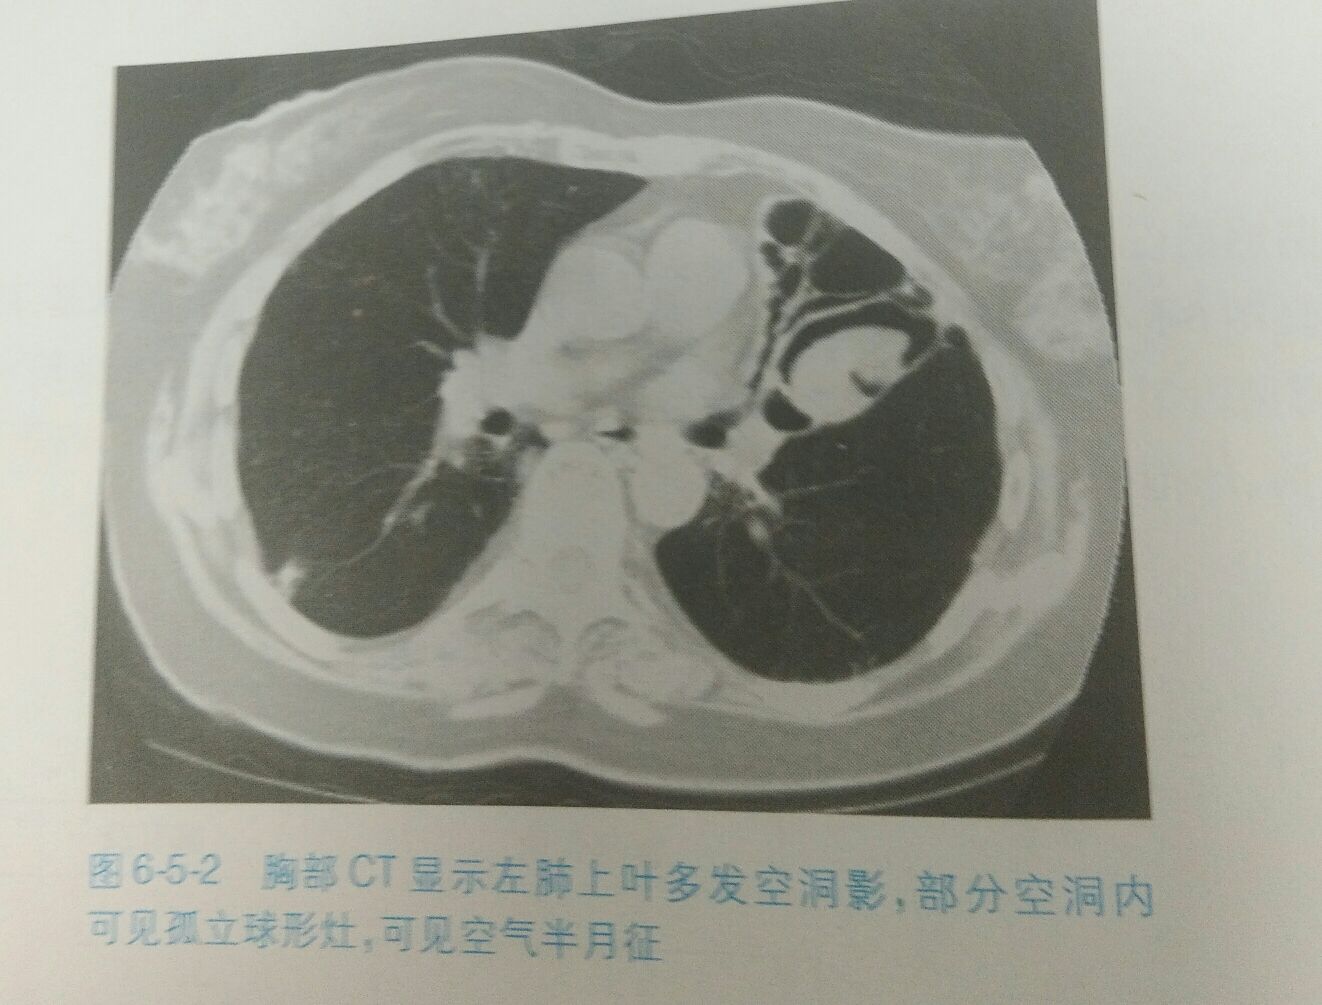 X射线肺炎图像的检测（Detecting Pneumonia in X-Ray Image）_使用深度学习算法对医疗图像如x-ray或ct扫描进行自动化分析期末报告-CSDN博客